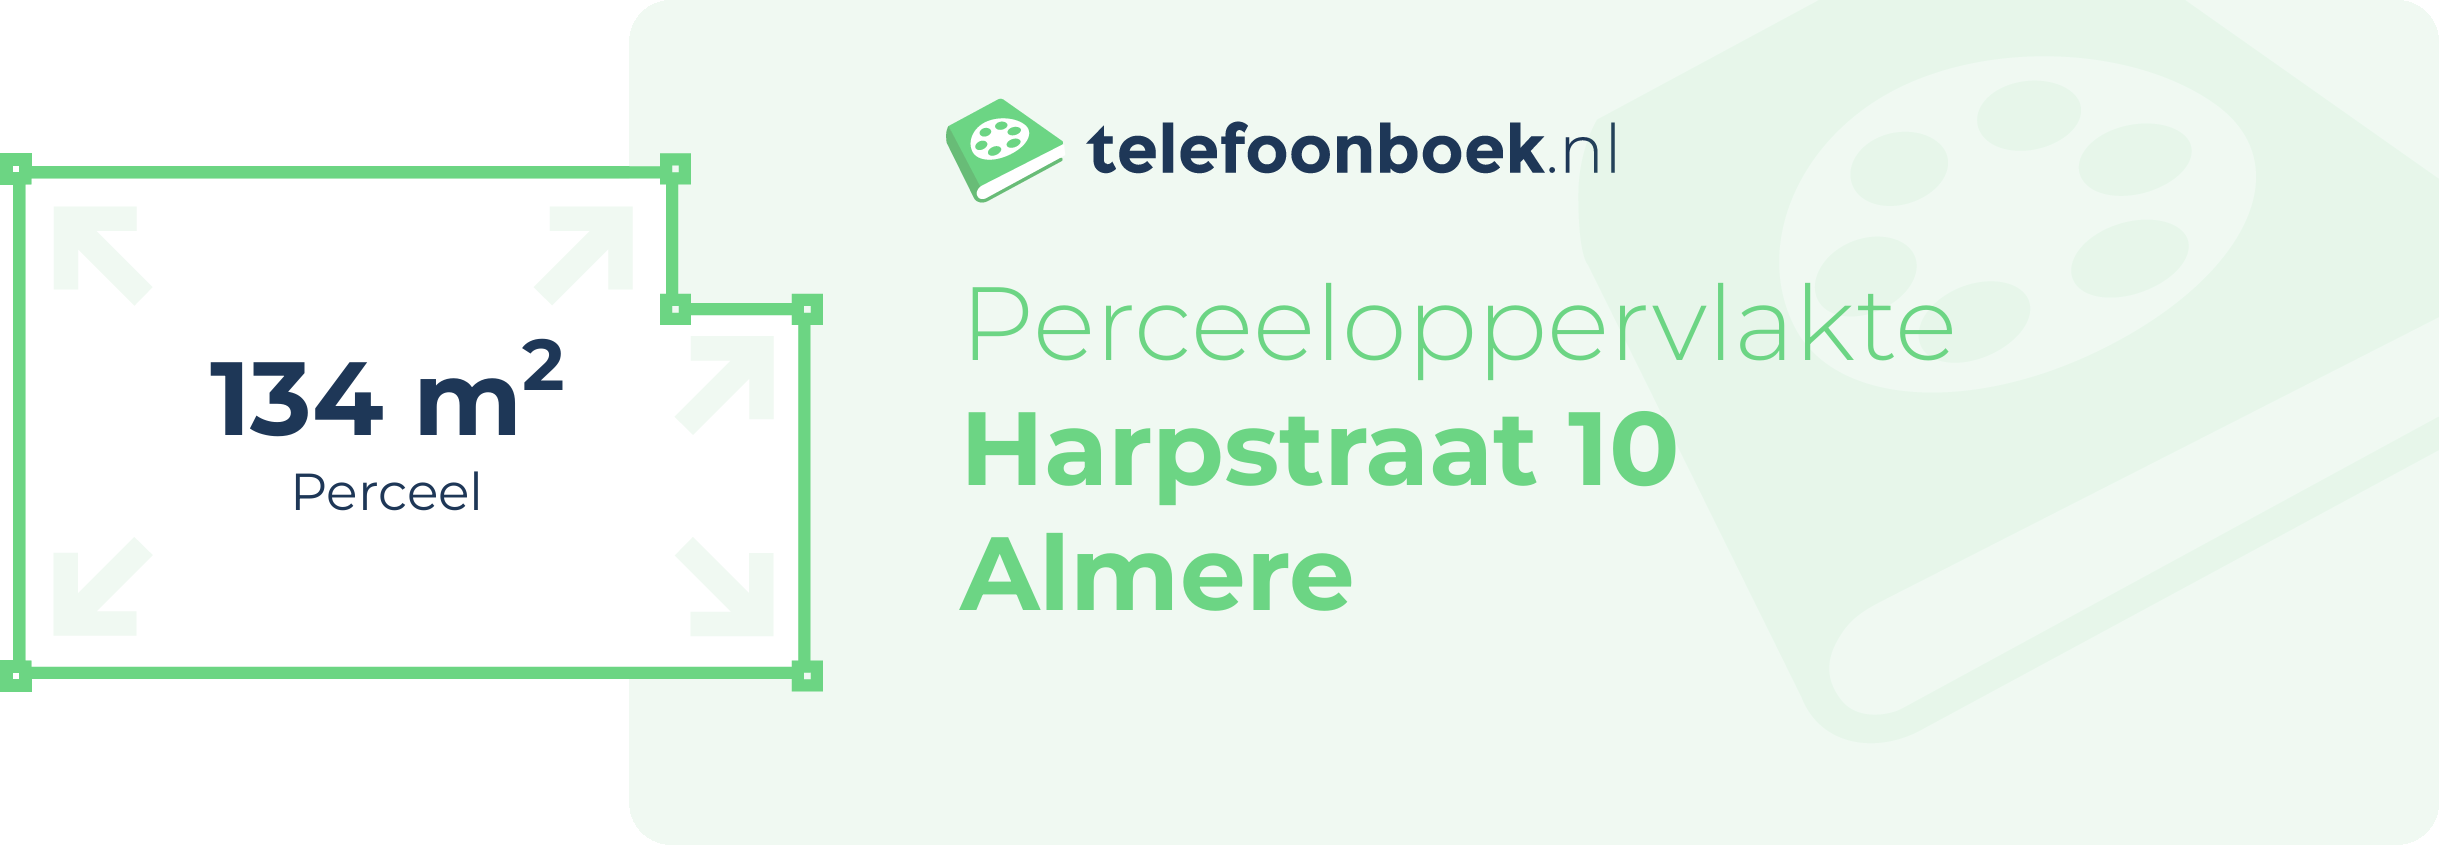 Perceeloppervlakte Harpstraat 10 Almere